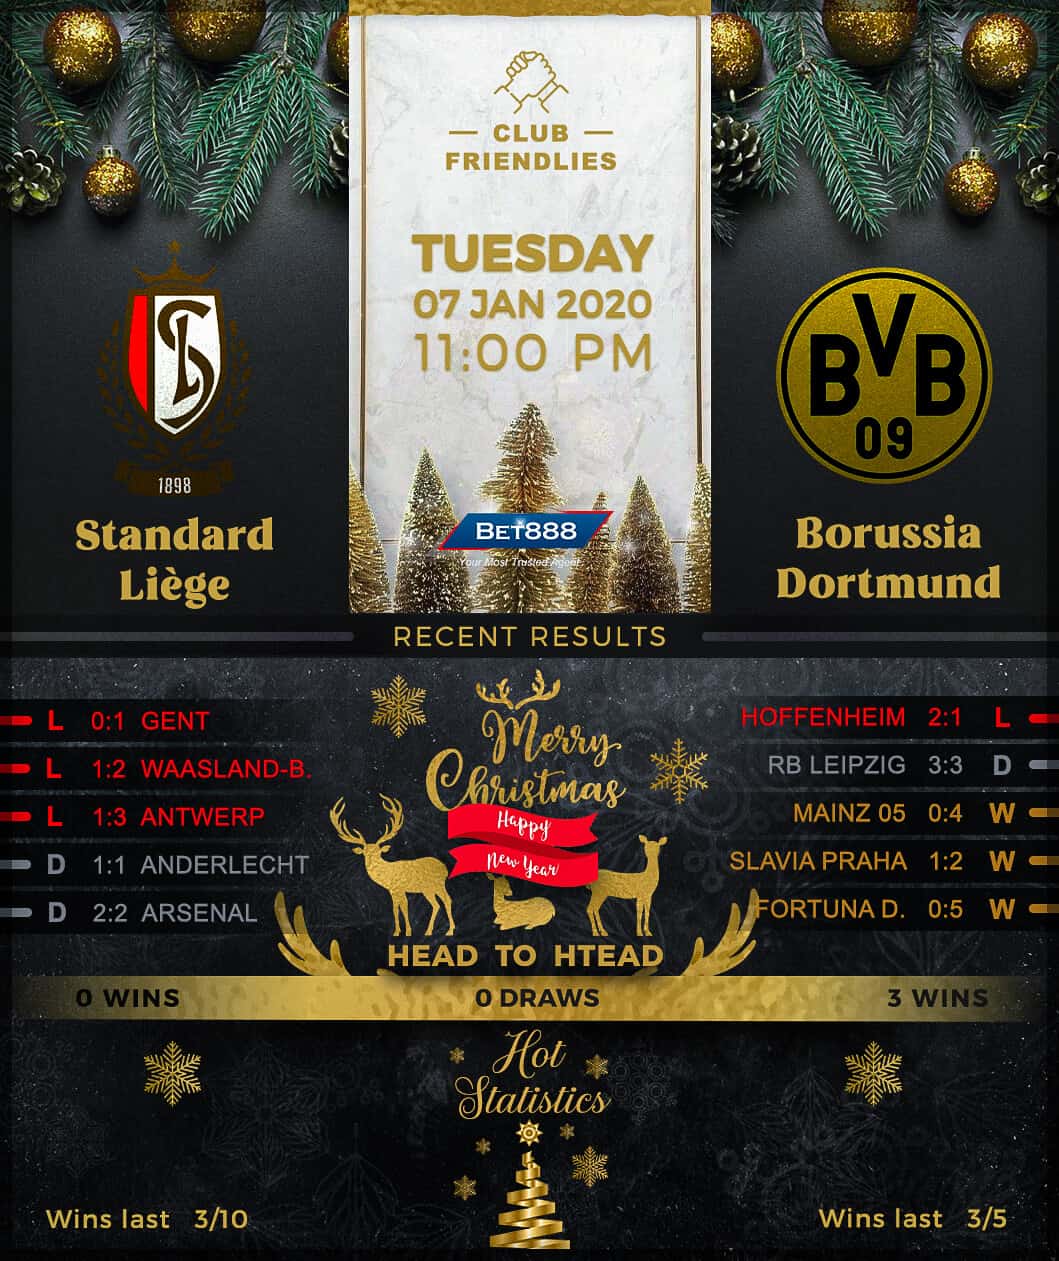 Standard Liege vs Borussia Dortmund﻿ 07/01/20